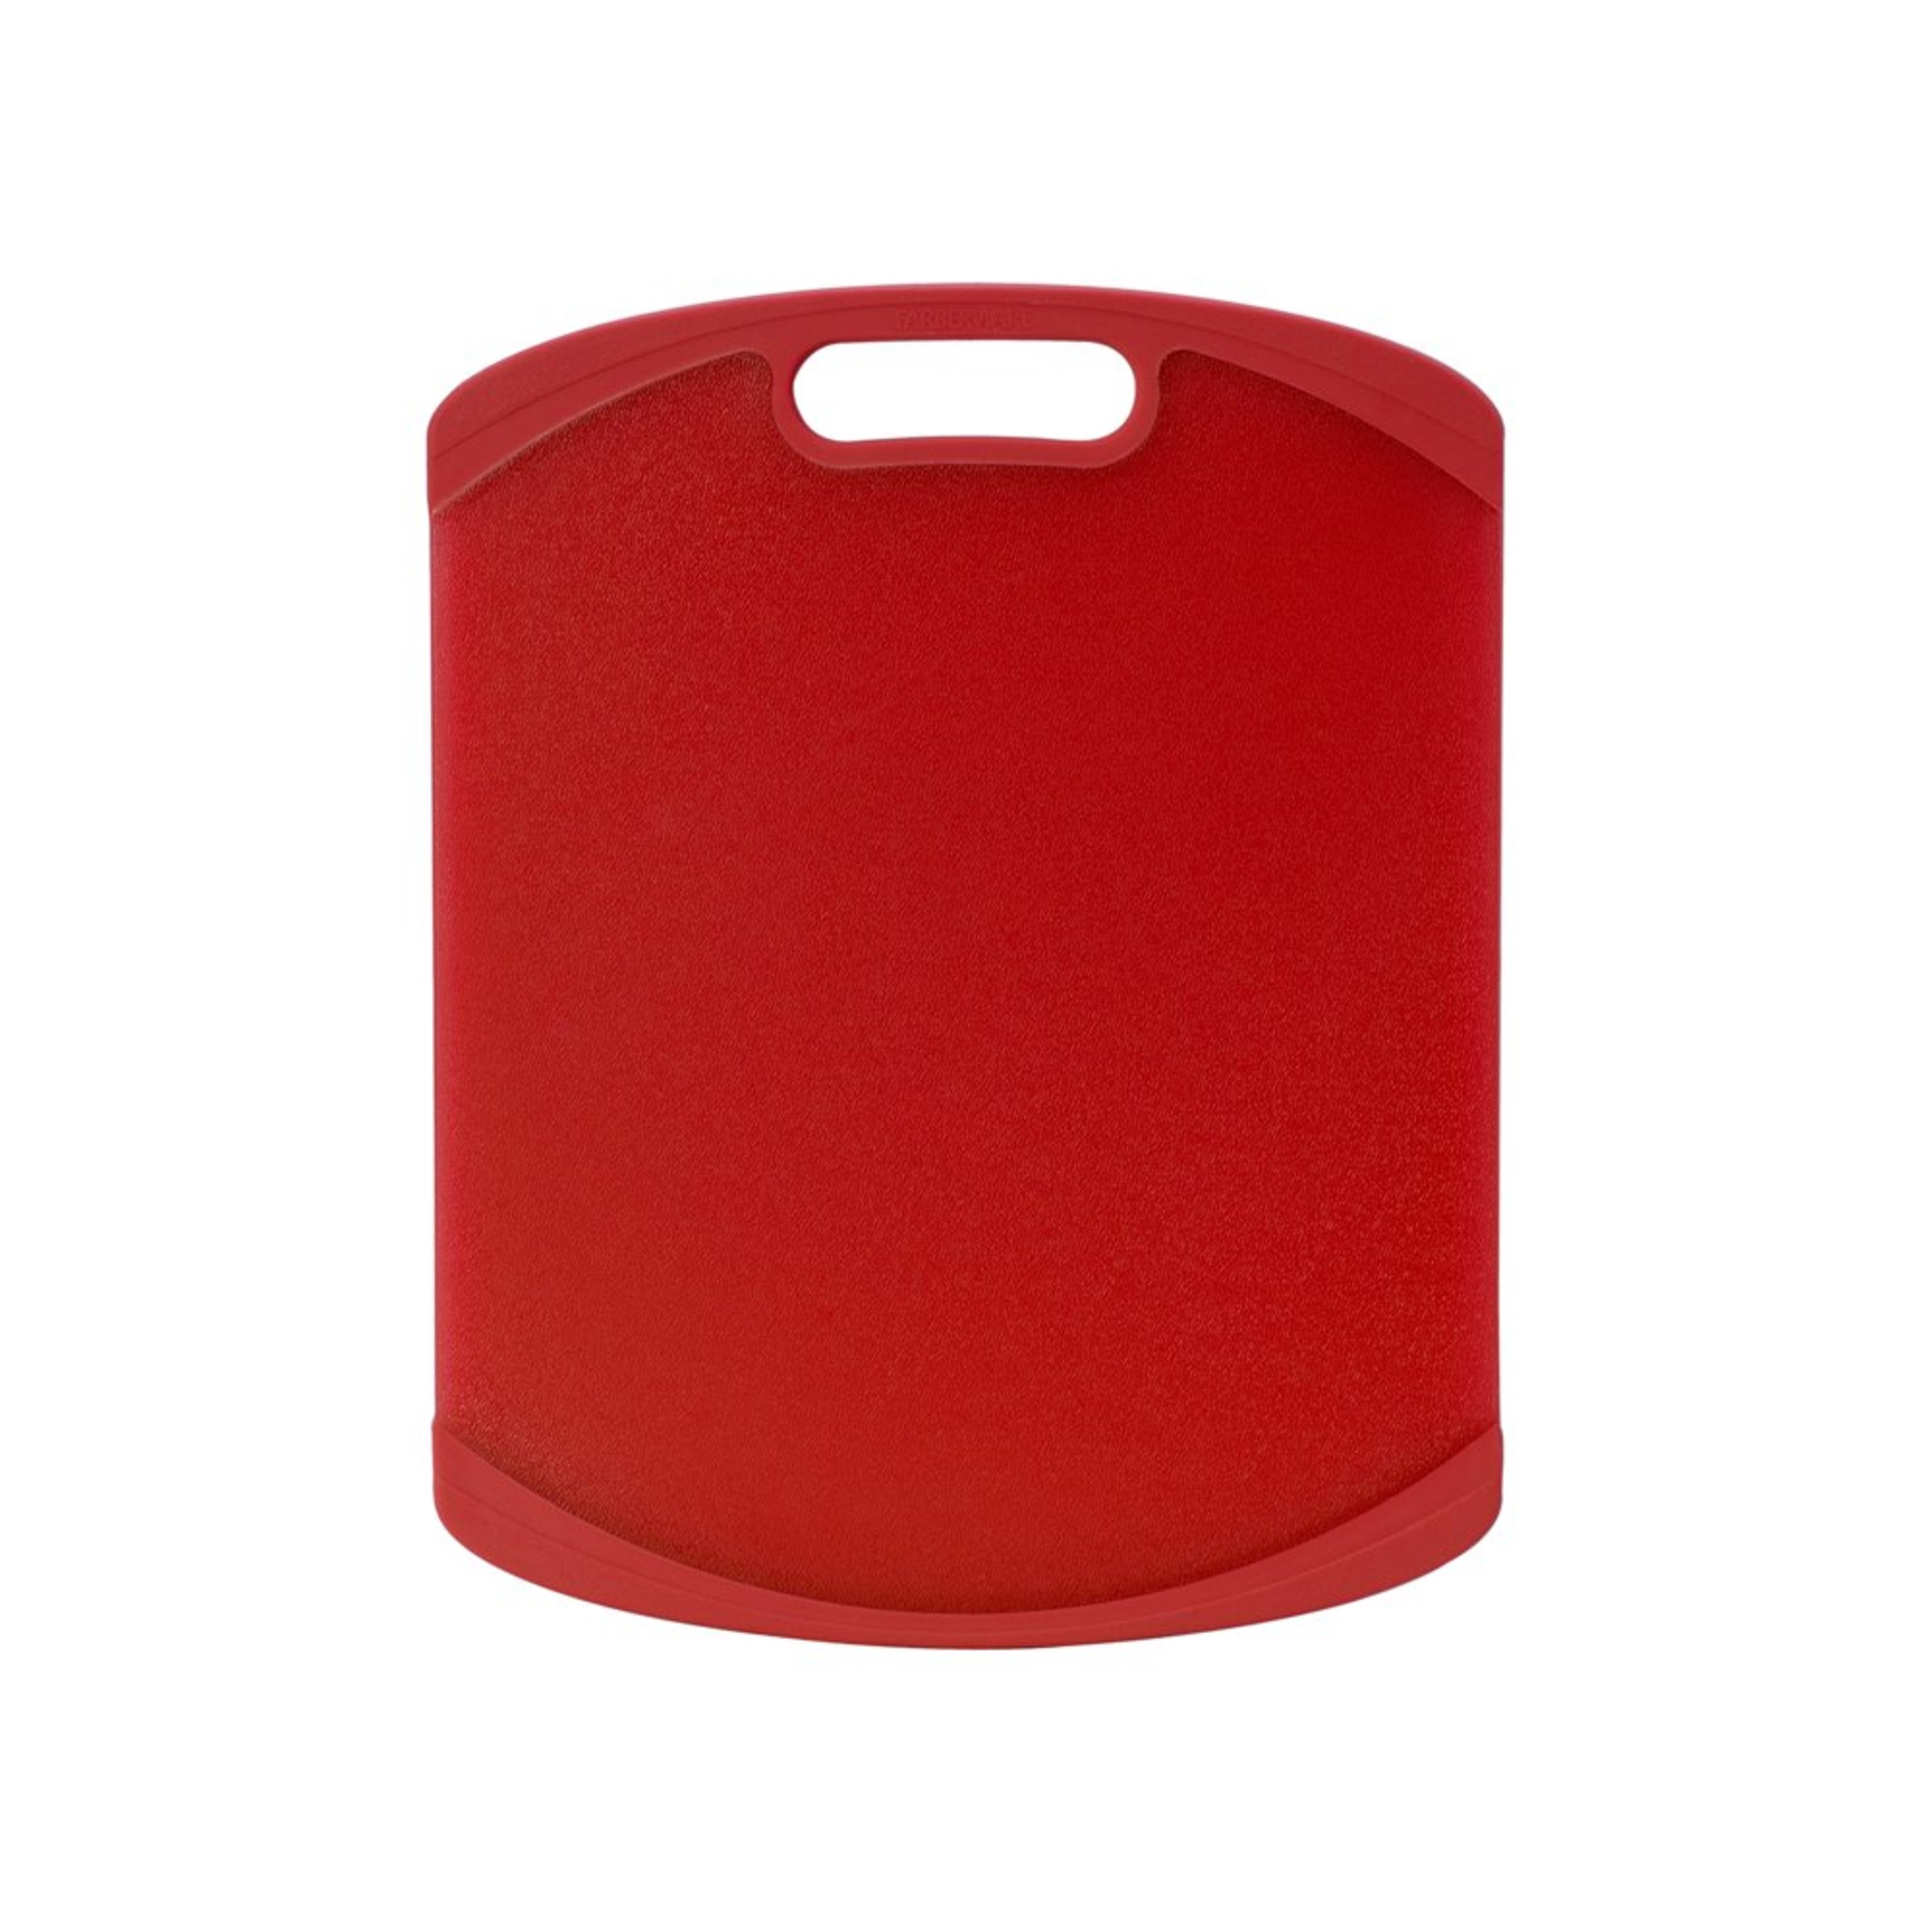 Farberware Plastic 11-inch x 14-inch Nonslip Cutting Board, Translucent Red - image 1 of 6